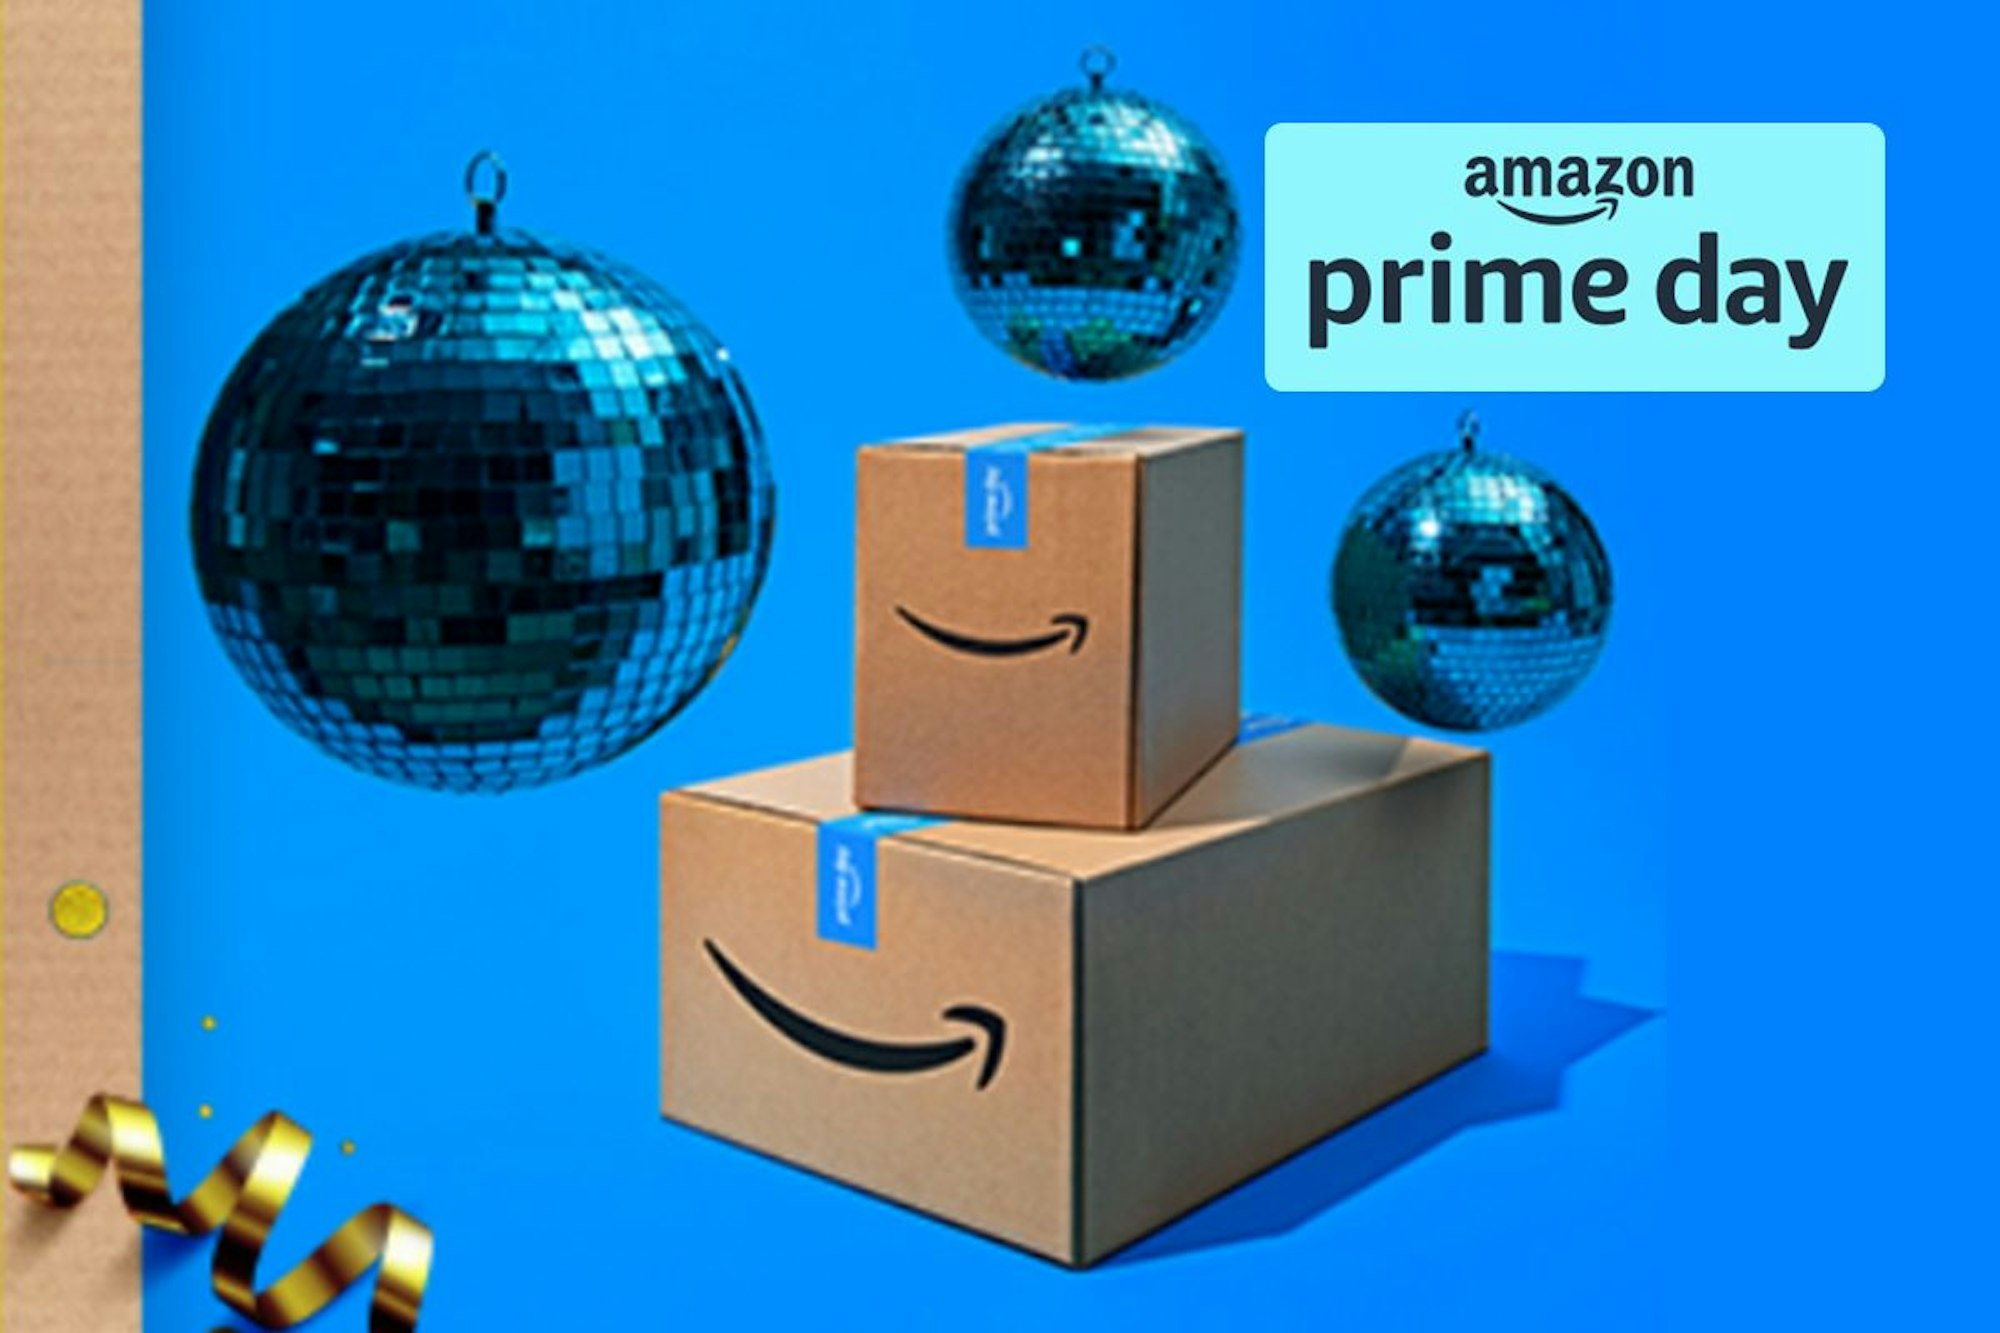 Amazon Prime Day Bild. Amazon Pakete mit dekorativen Kugeln.